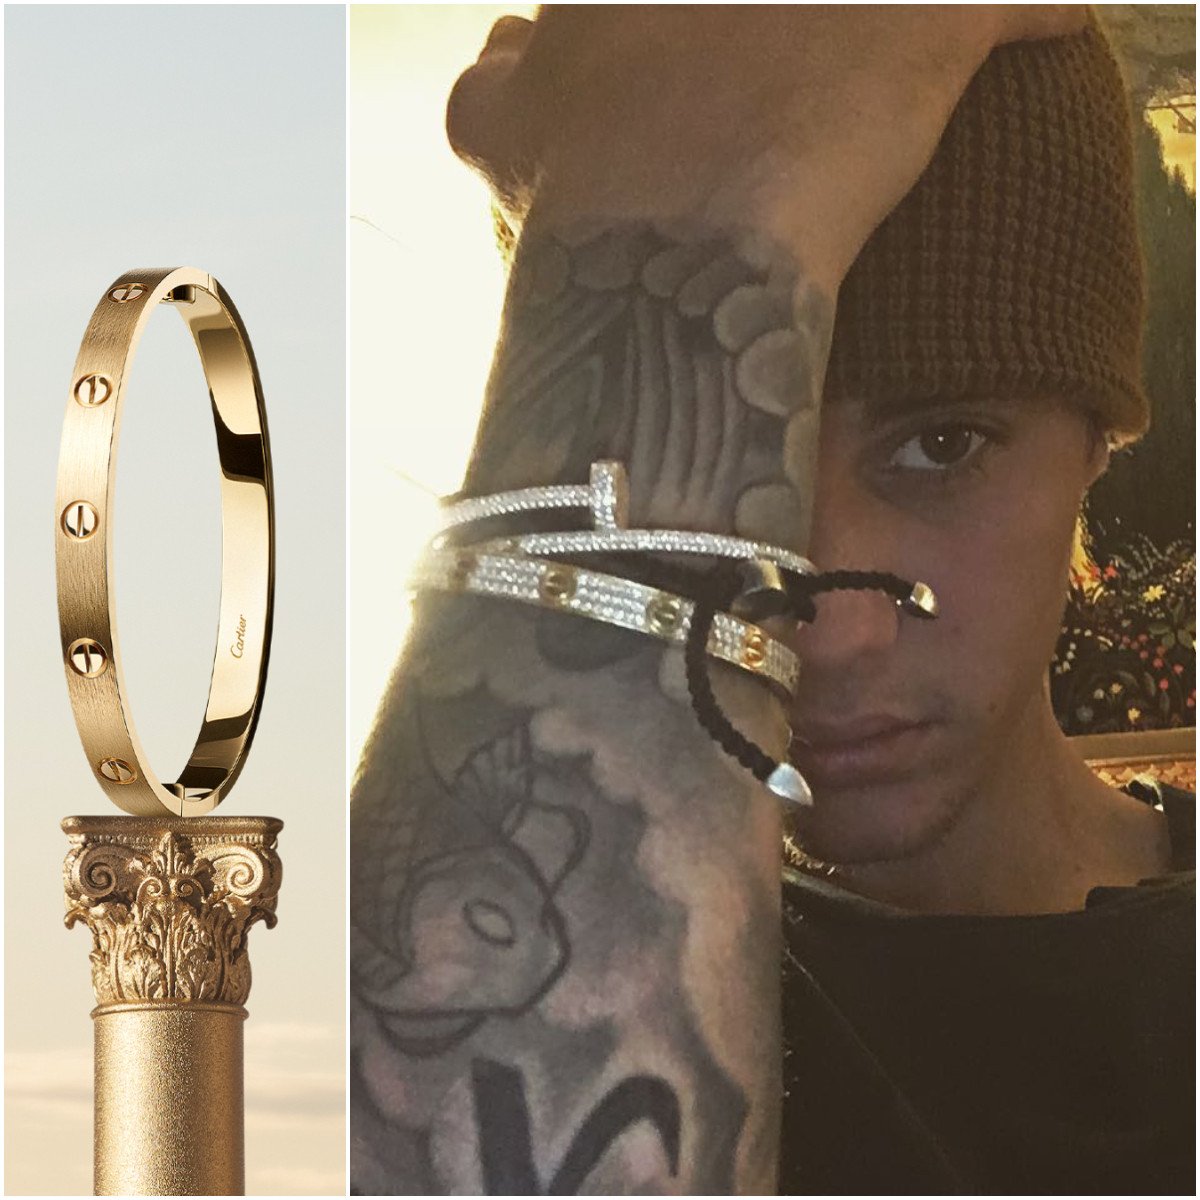 Cartier’s Love bracelets remain as popular as ever, counting celebrity fans like Justin Bieber. Photos: @cartier, @justinbieber/Instagram